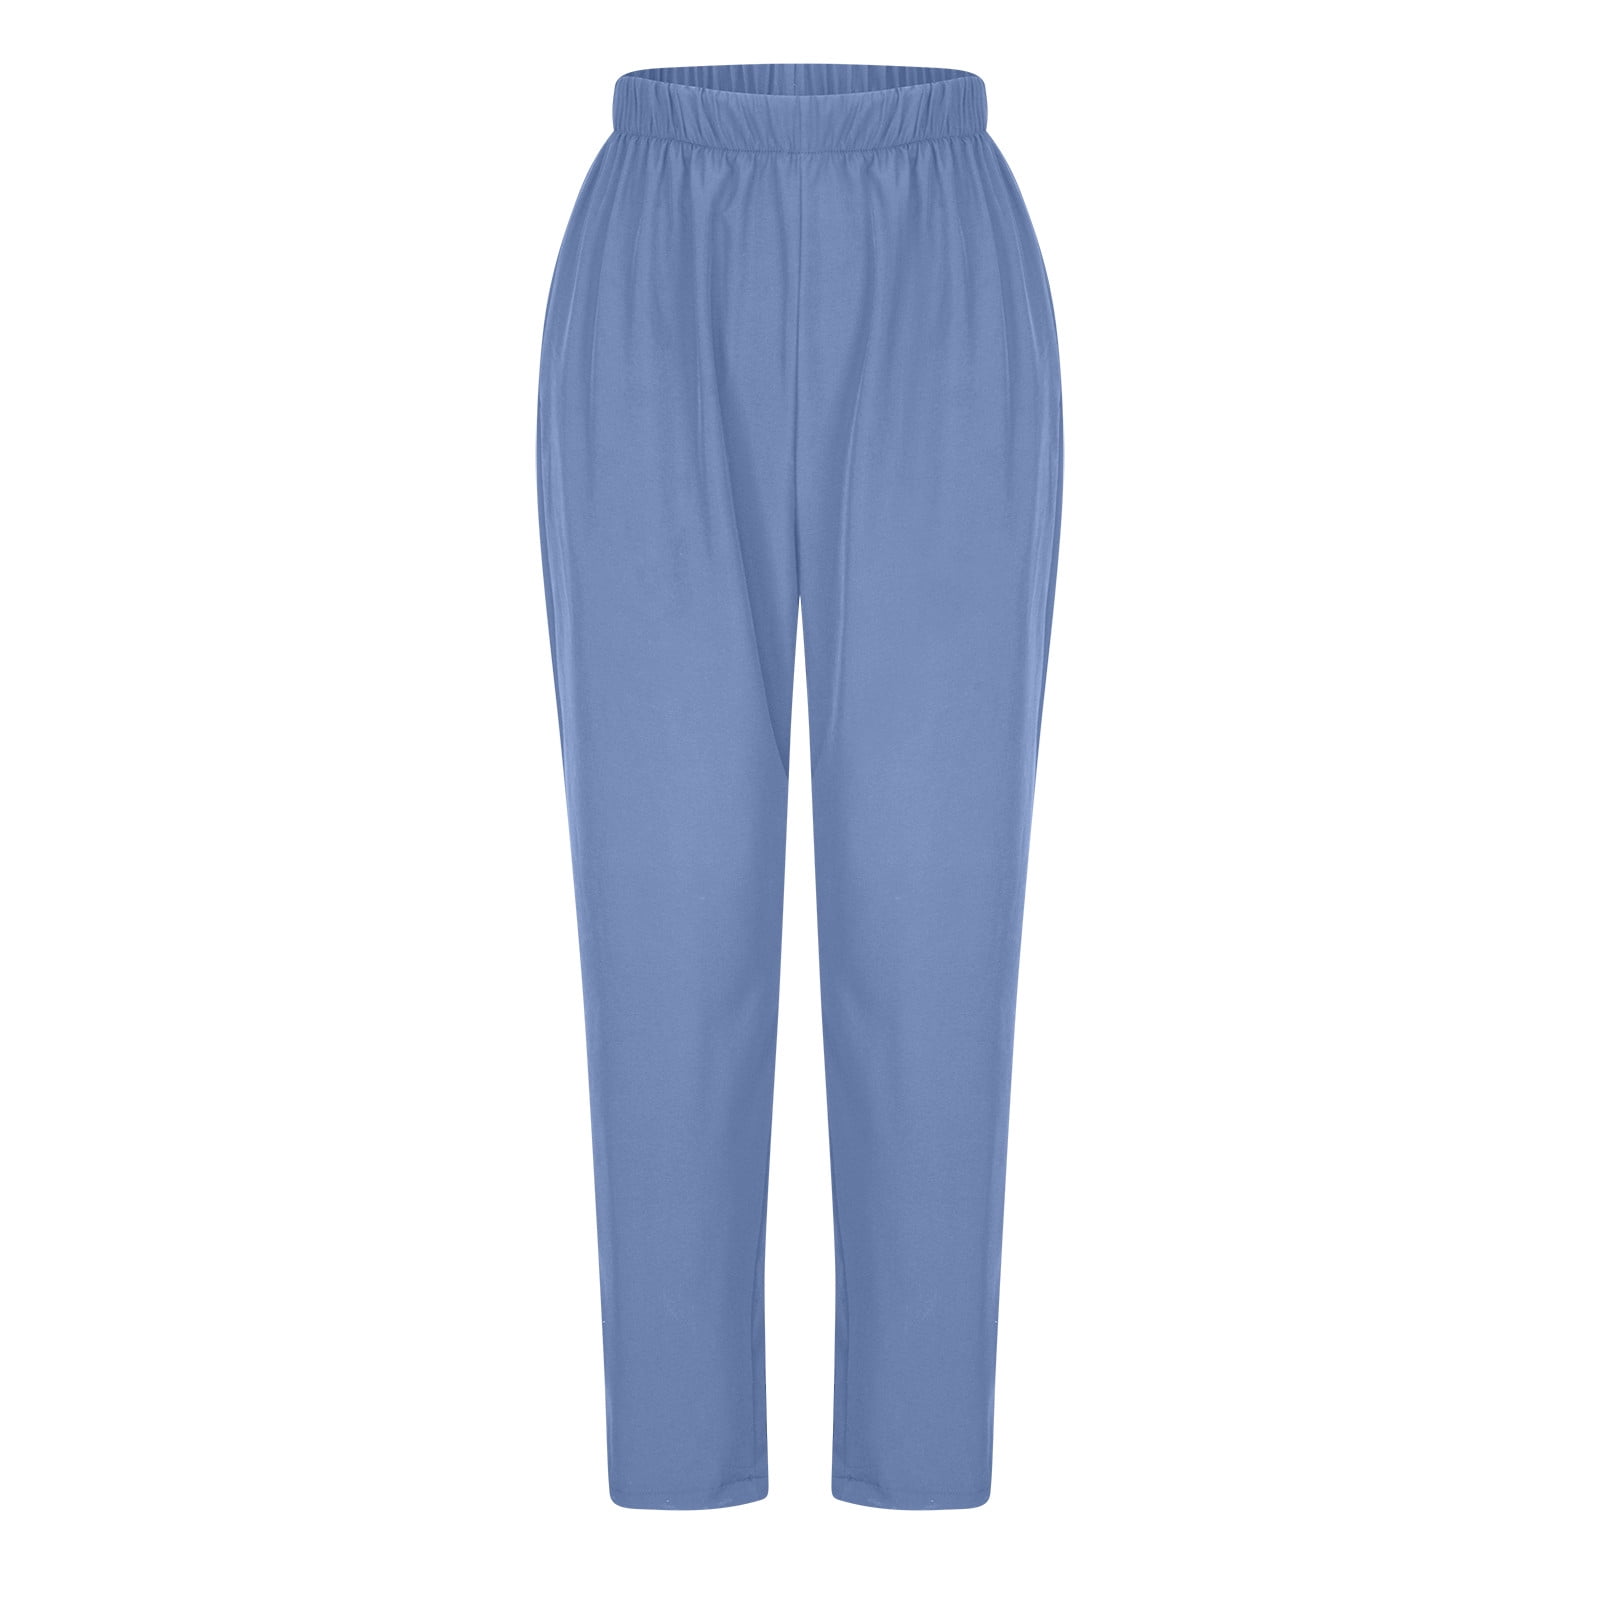 LAIVNEI Cotton Pants for Women Full Length Pants Women's Nurse Health ...